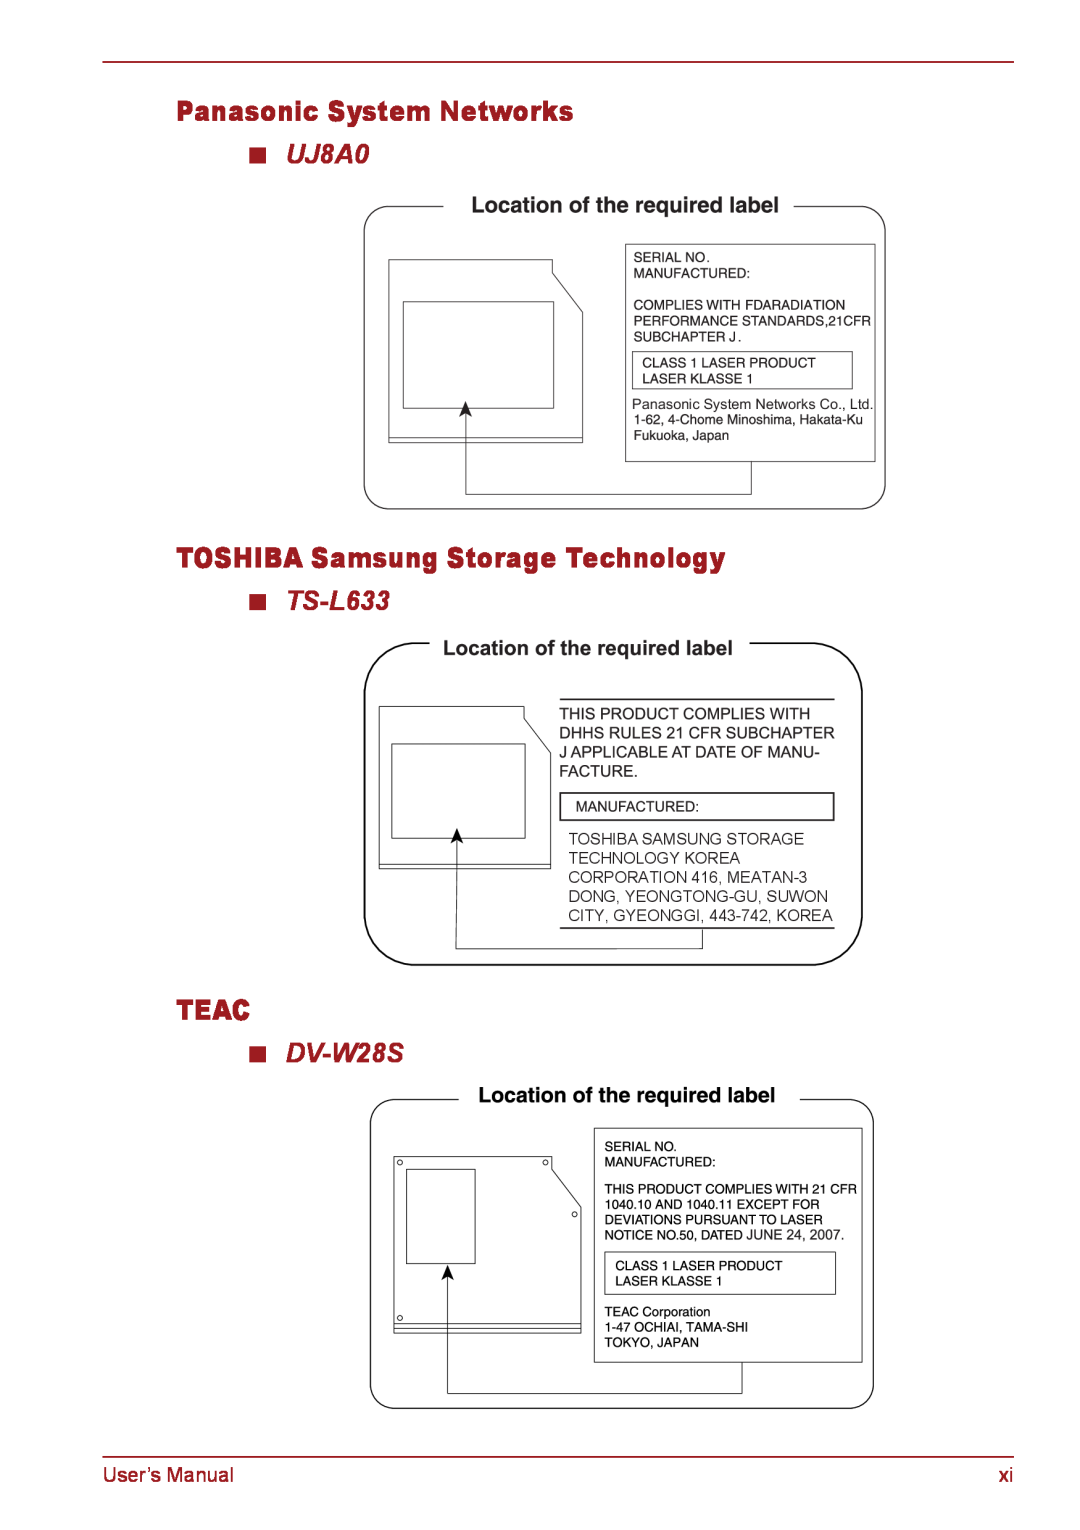 Toshiba PSC08U-02D01D Panasonic System Networks, TOSHIBA Samsung Storage Technology, Teac, UJ8A0, TS-L633, DV-W28S 